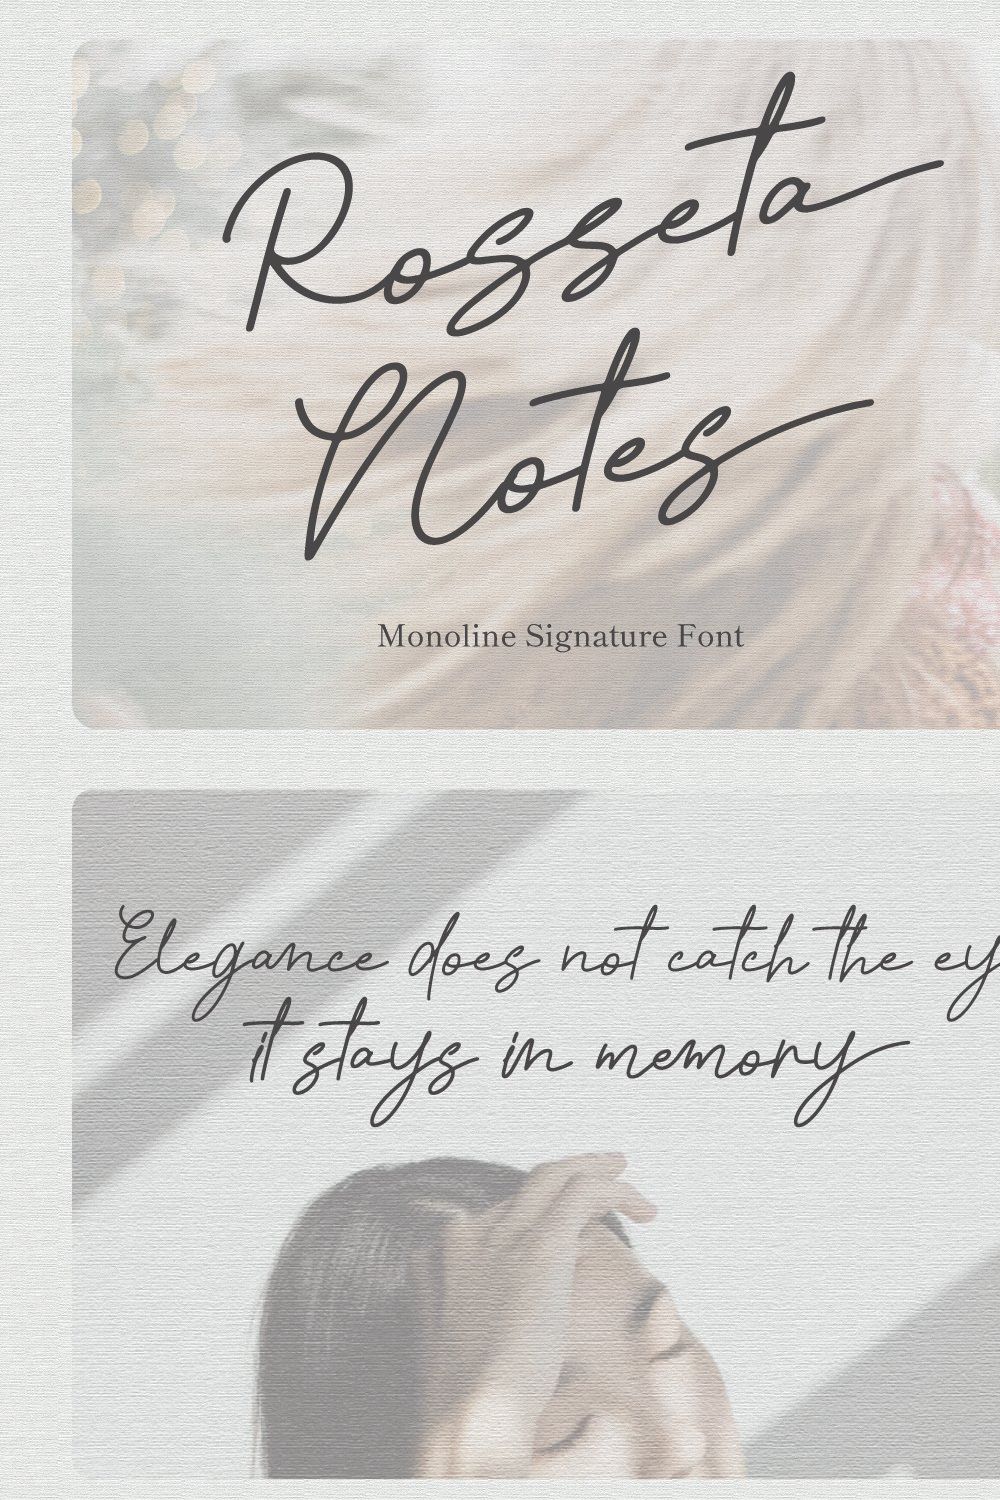 Rosseta Notes - Monoline Signature pinterest preview image.